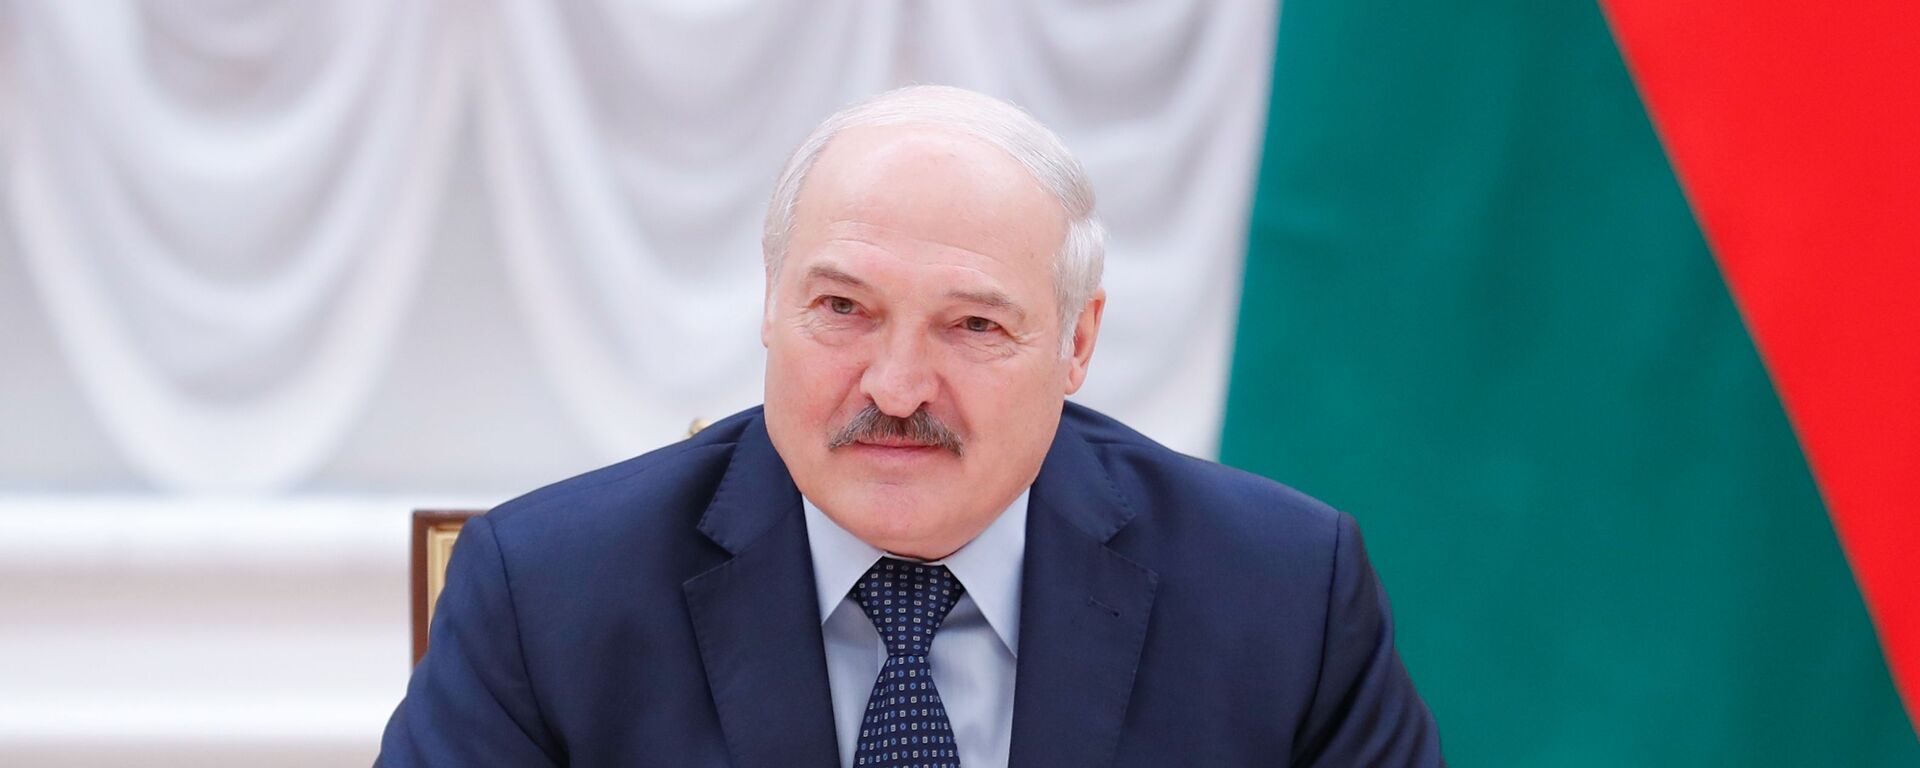 Belarus Prezidenti Aleksandr Lukaşenko, arxiv şəkli - Sputnik Azərbaycan, 1920, 21.11.2021